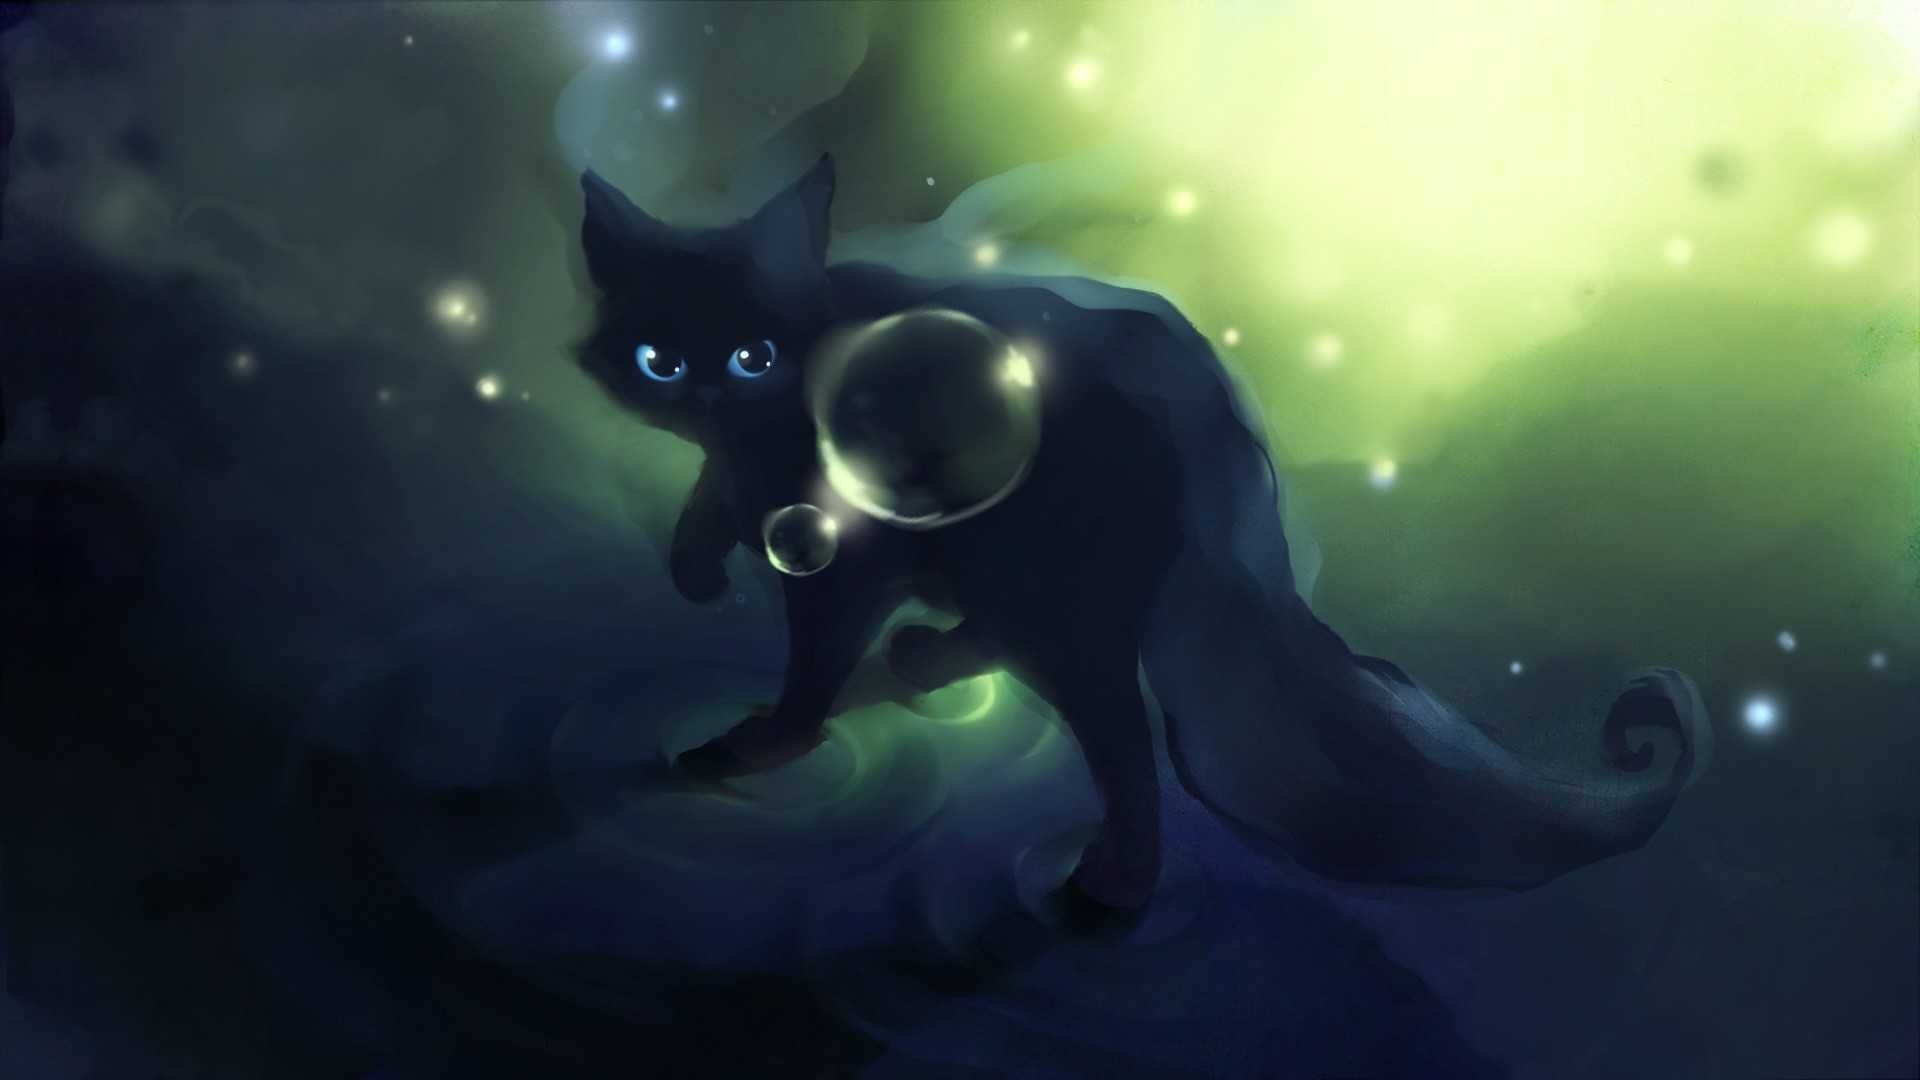 Anime Black Cat Wallpaper Desktop HD Image